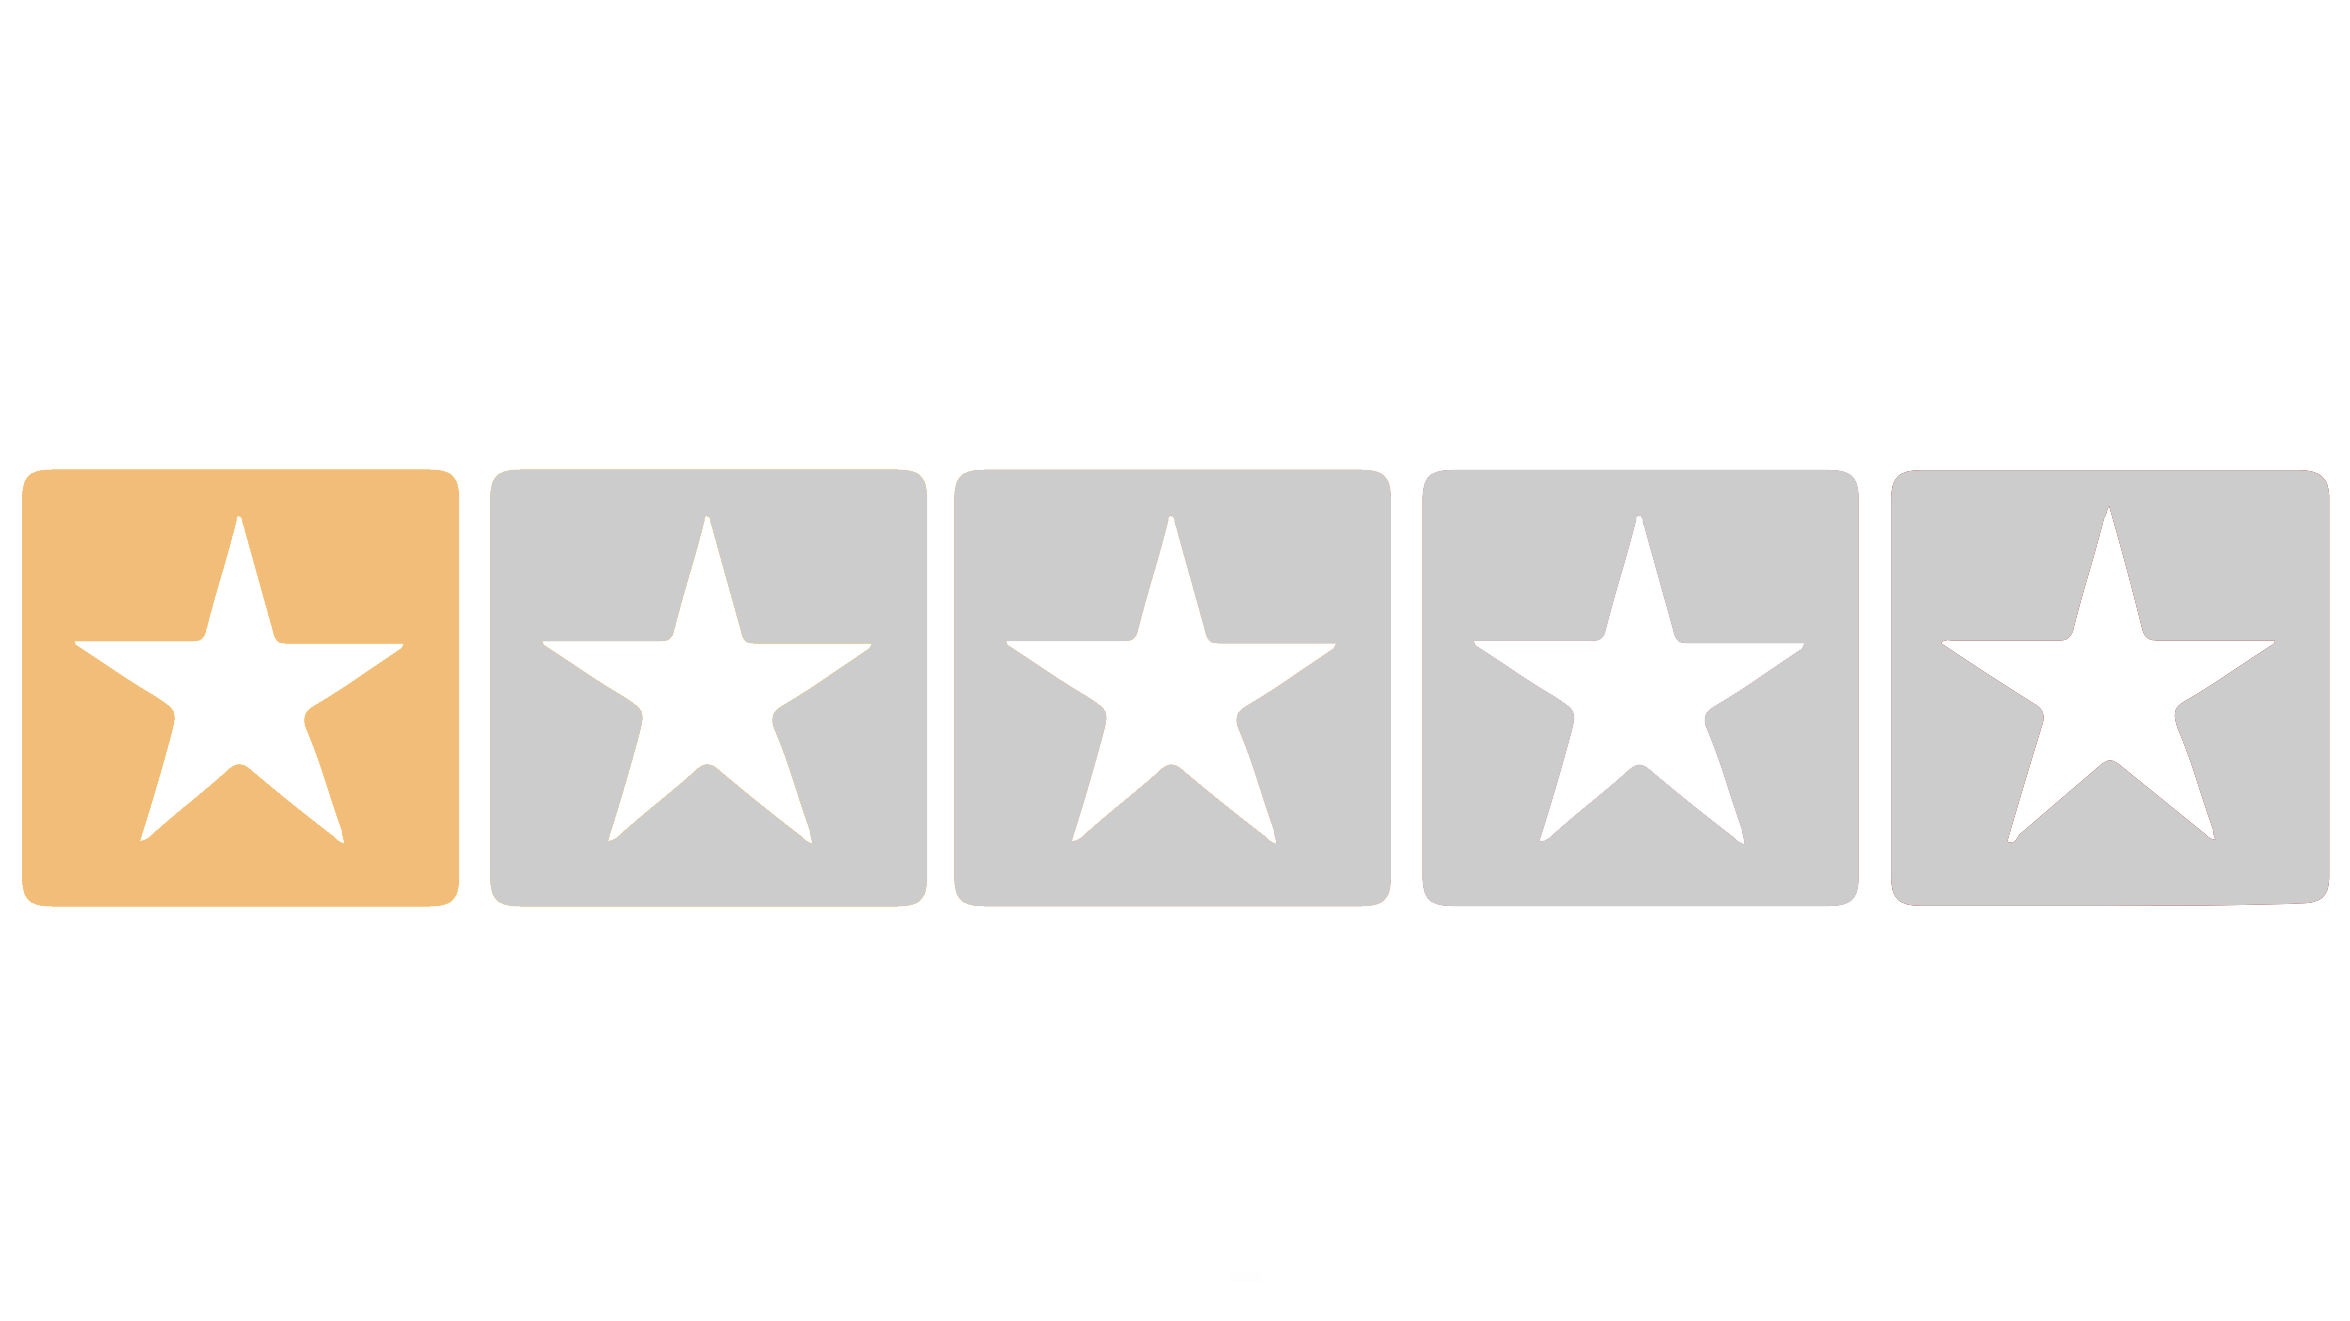 Chris G’s Best Yelp Reviews: Gabriella Cafe – 1/5 Stars